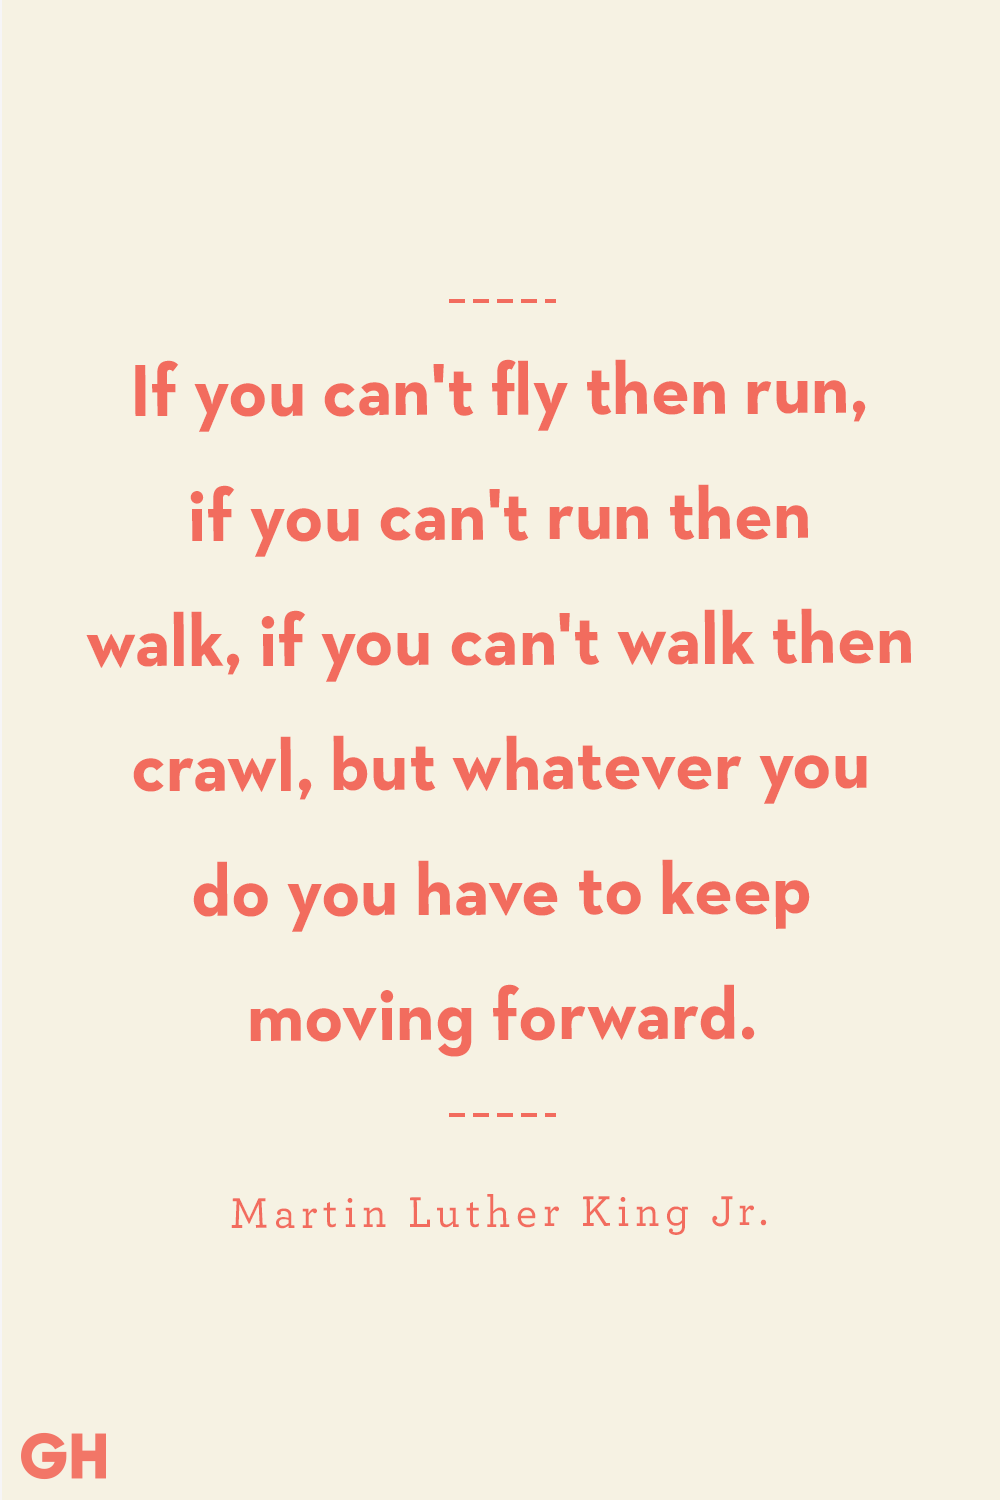 keep moving forward quotes